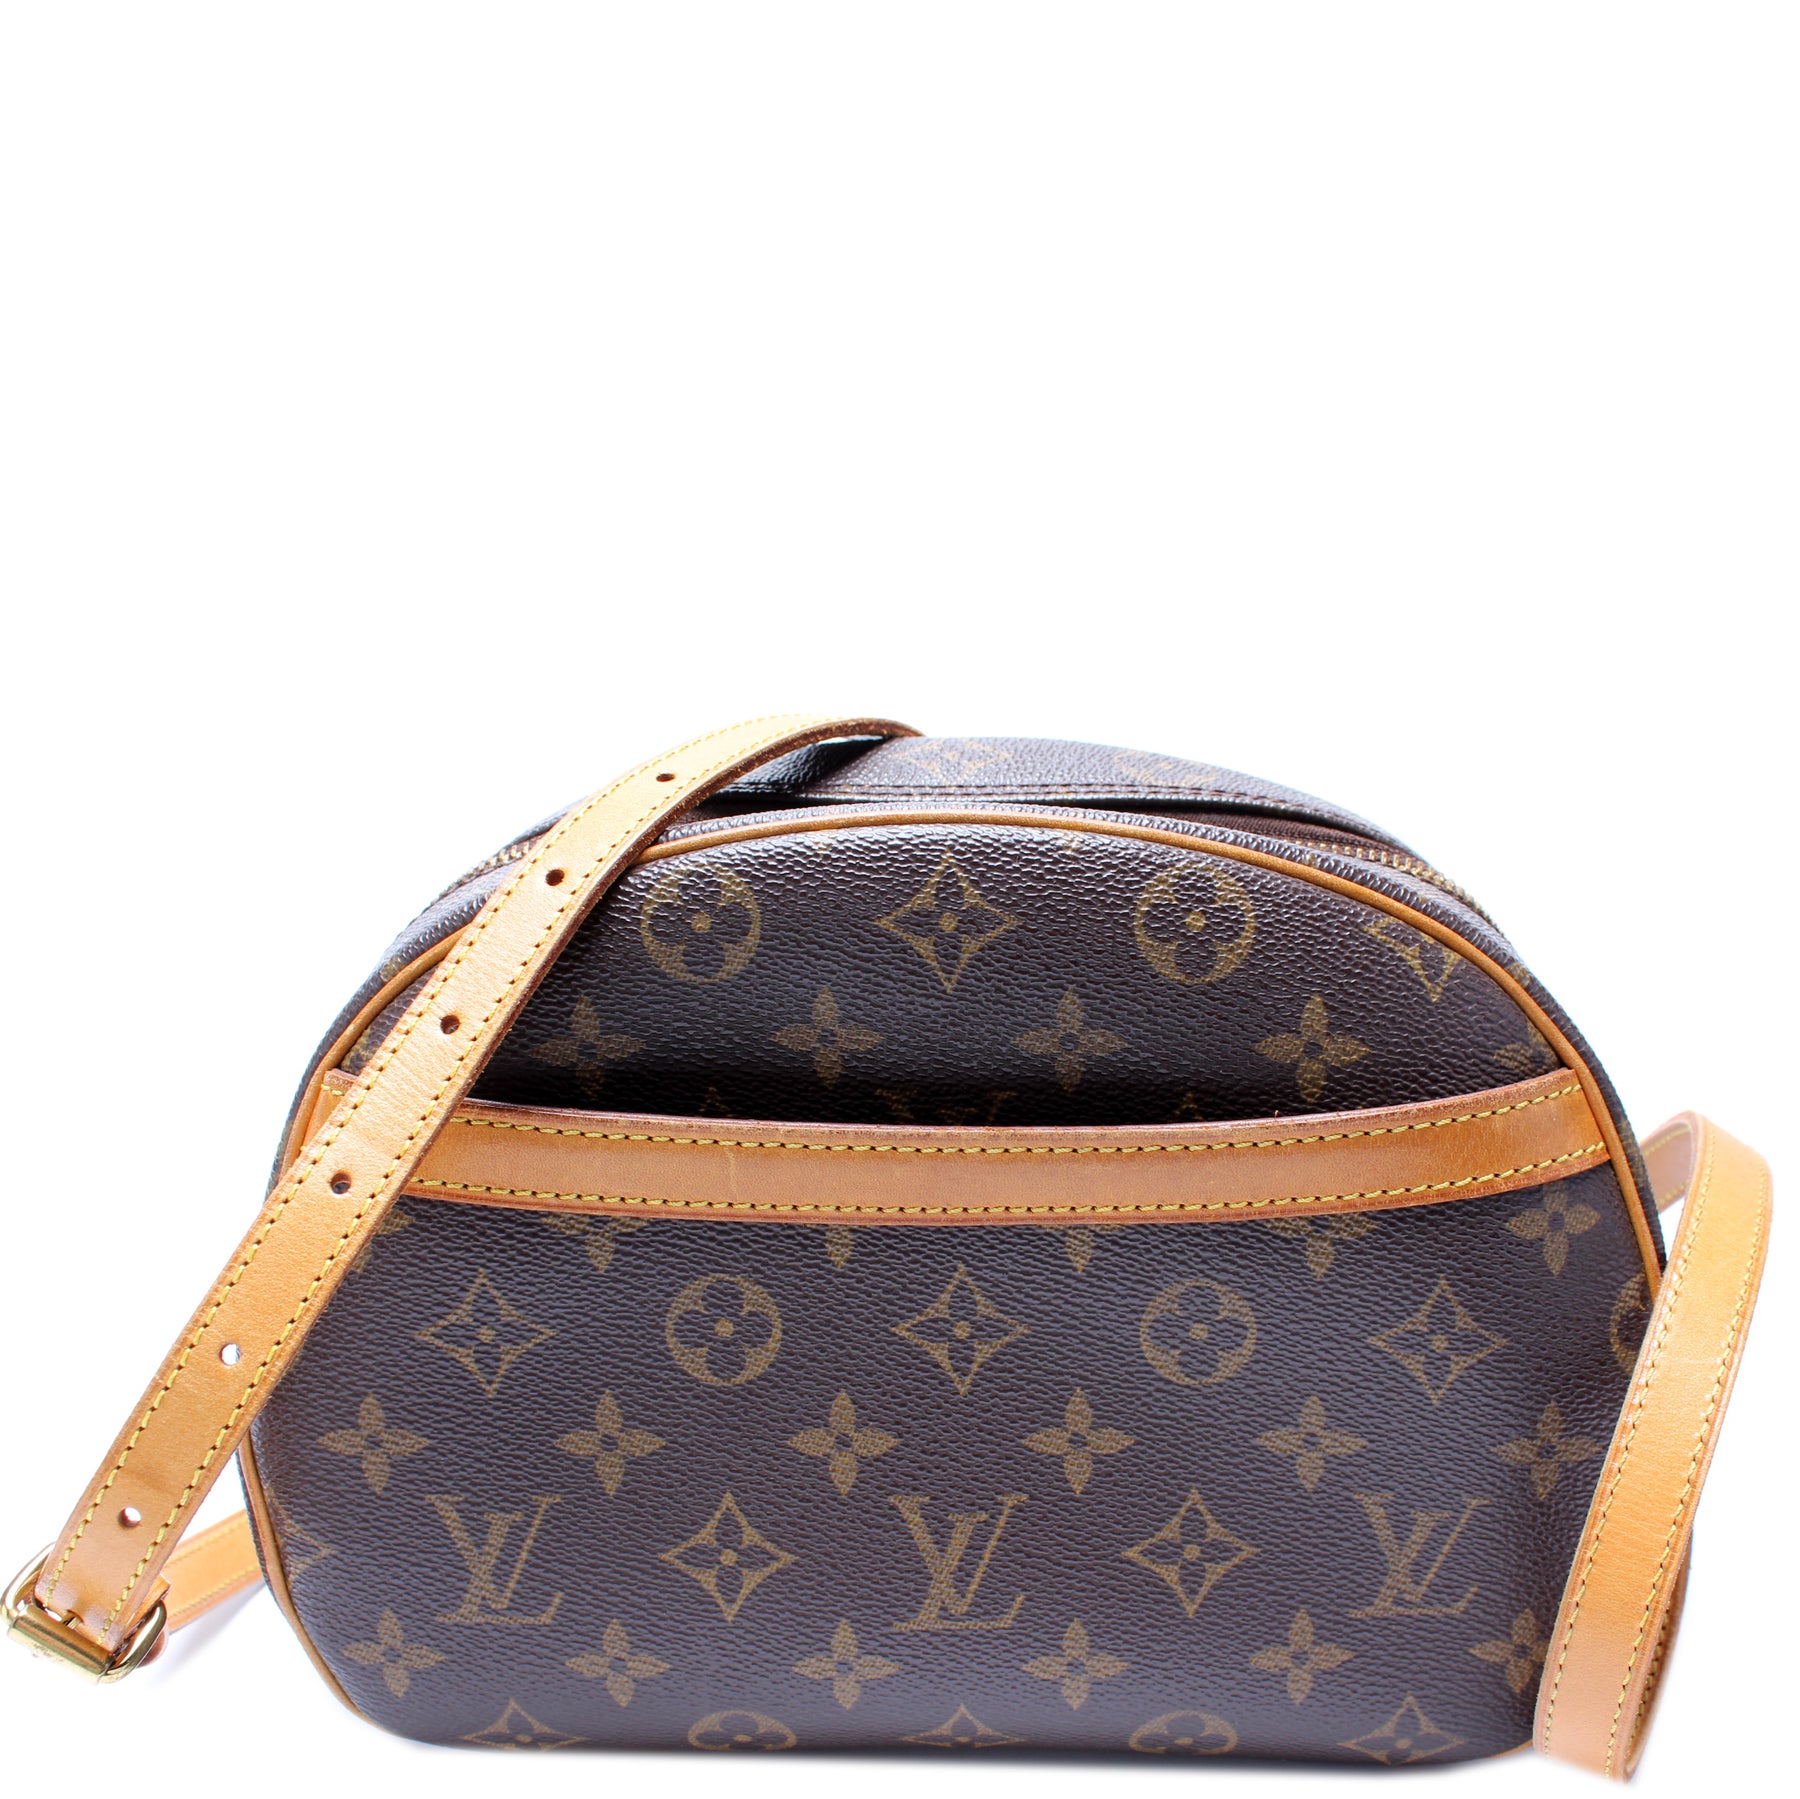 Blois leather handbag